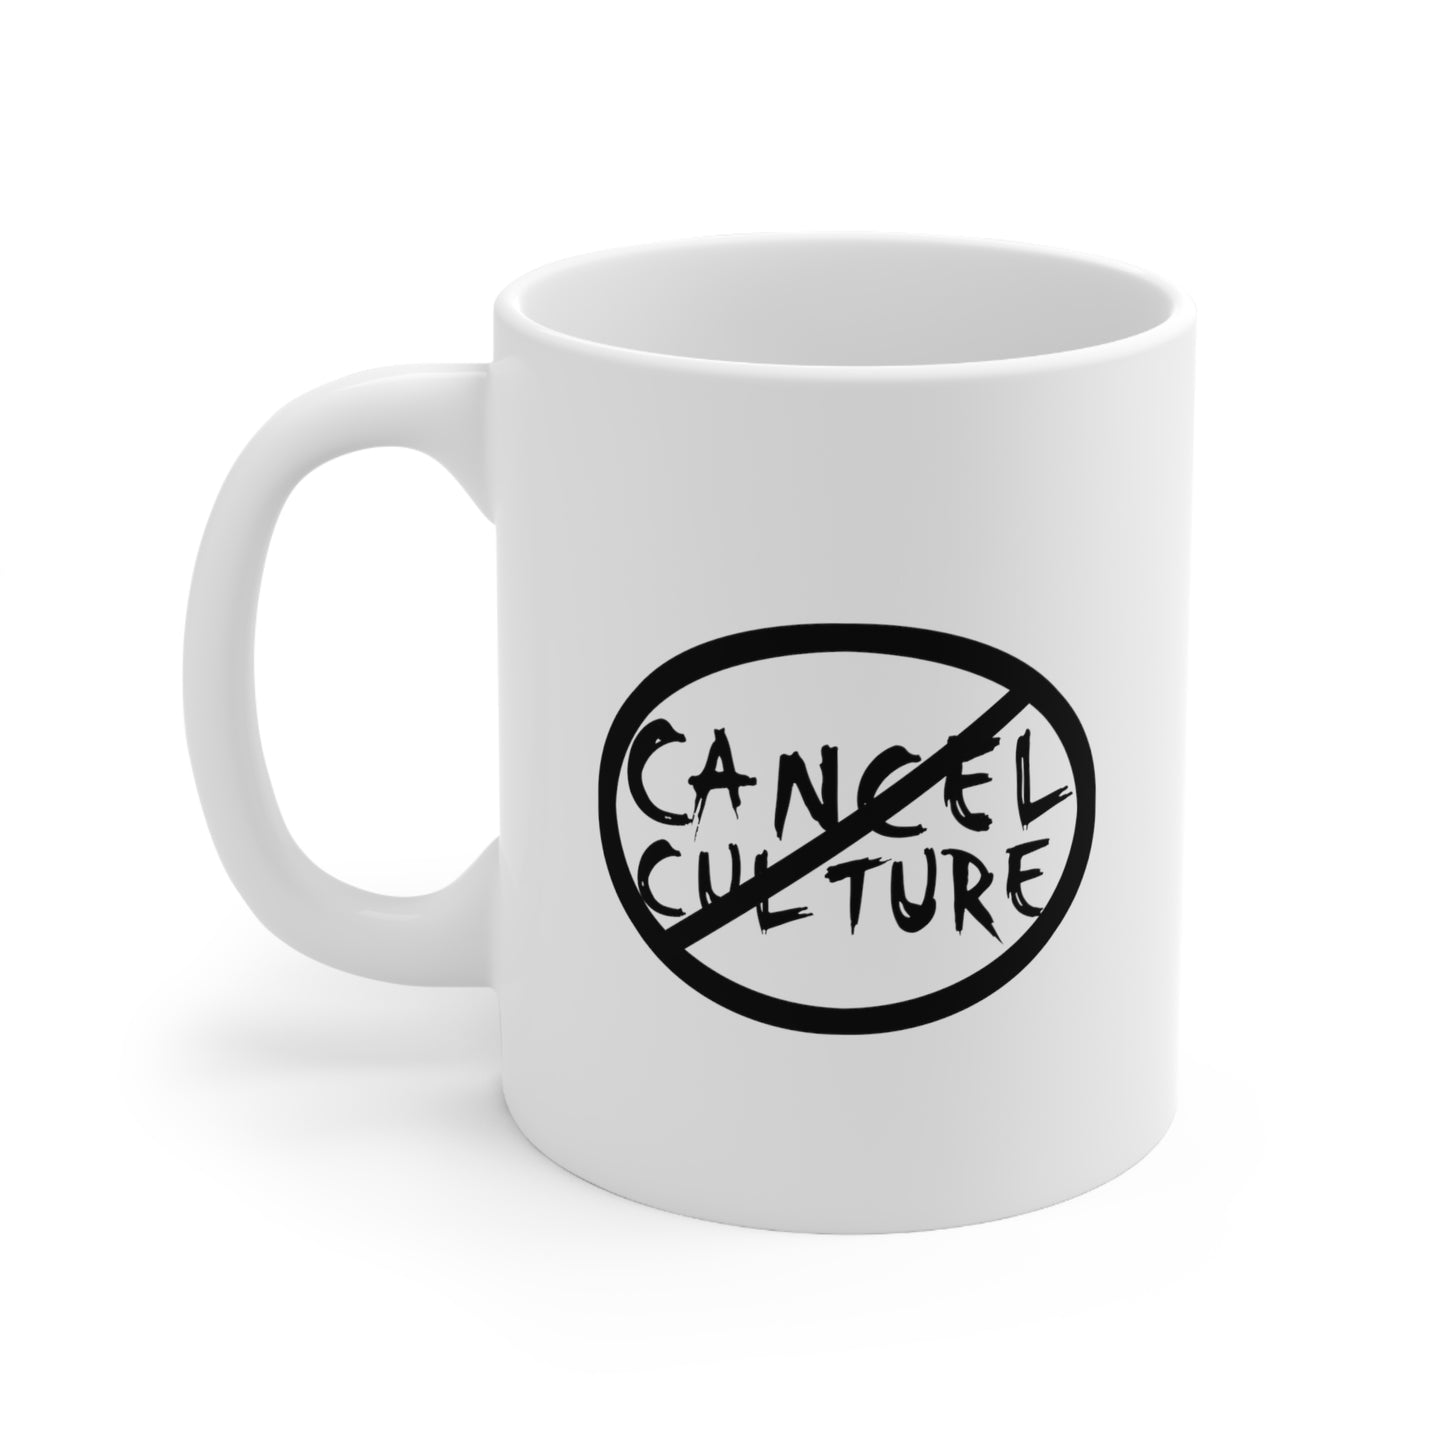 (Cancel) Cancel Culture mug